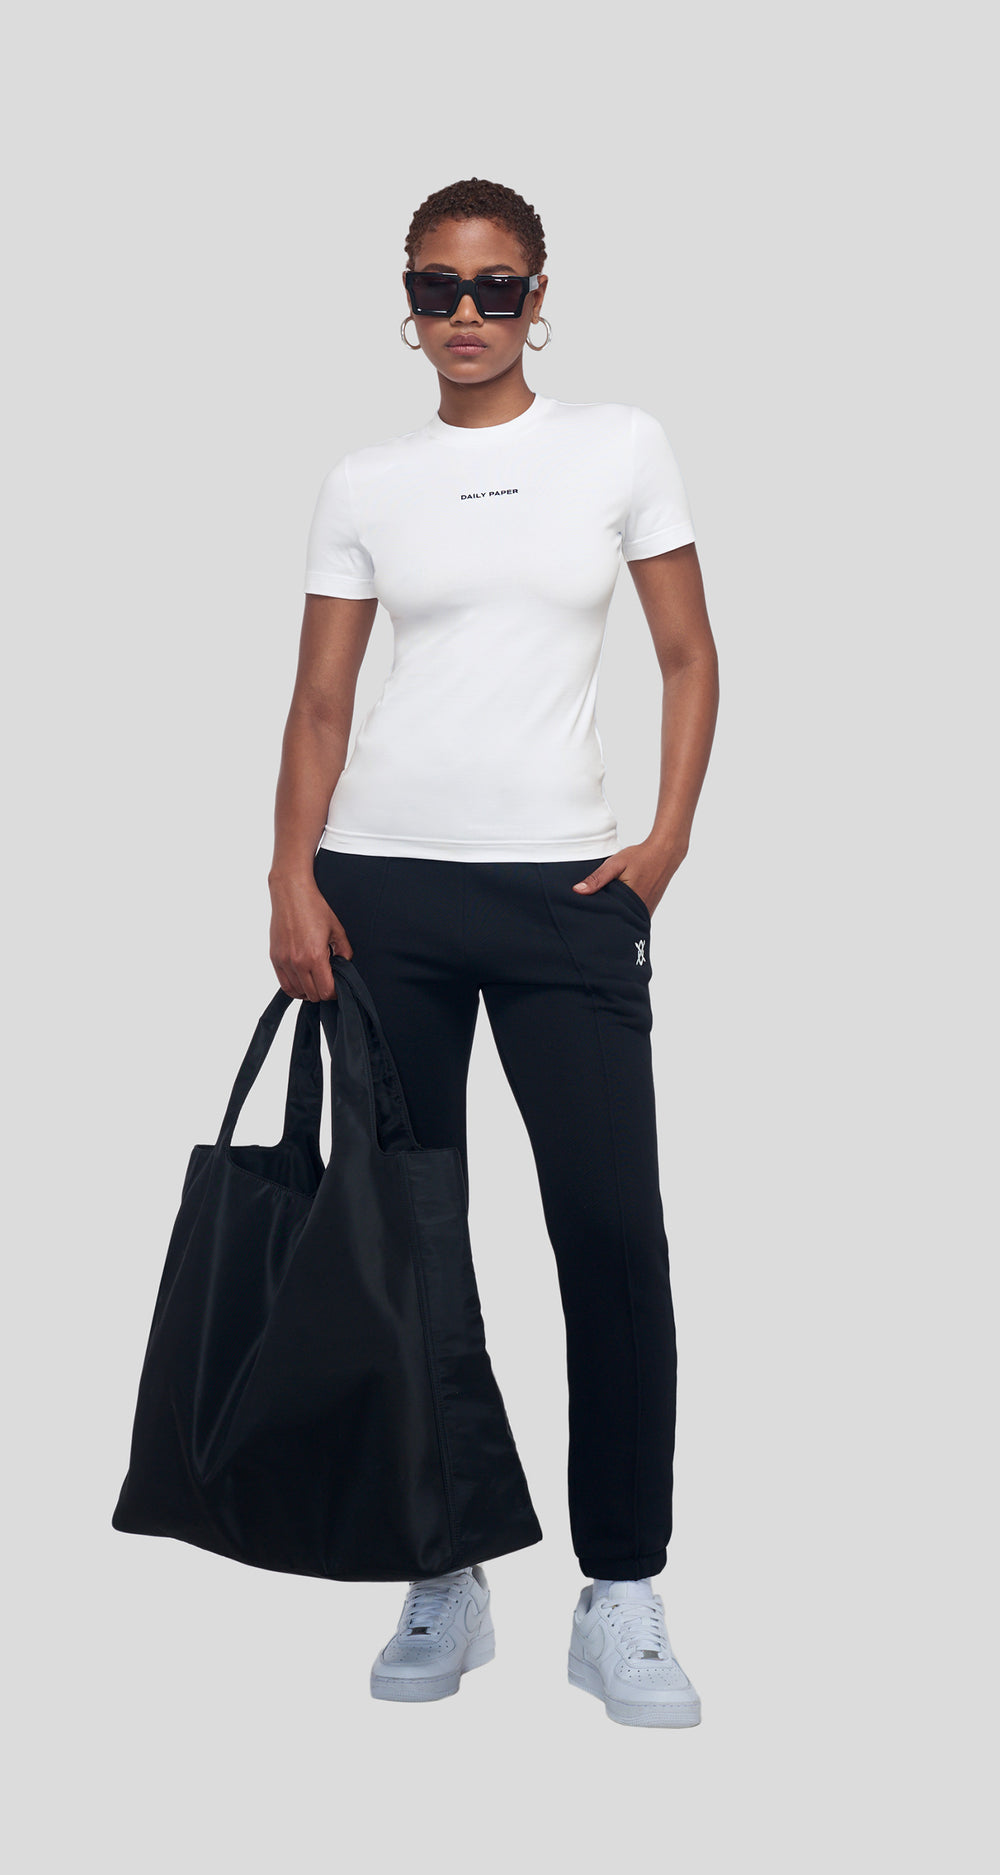 DP - White Emefa T-Shirt - Wmn - Front